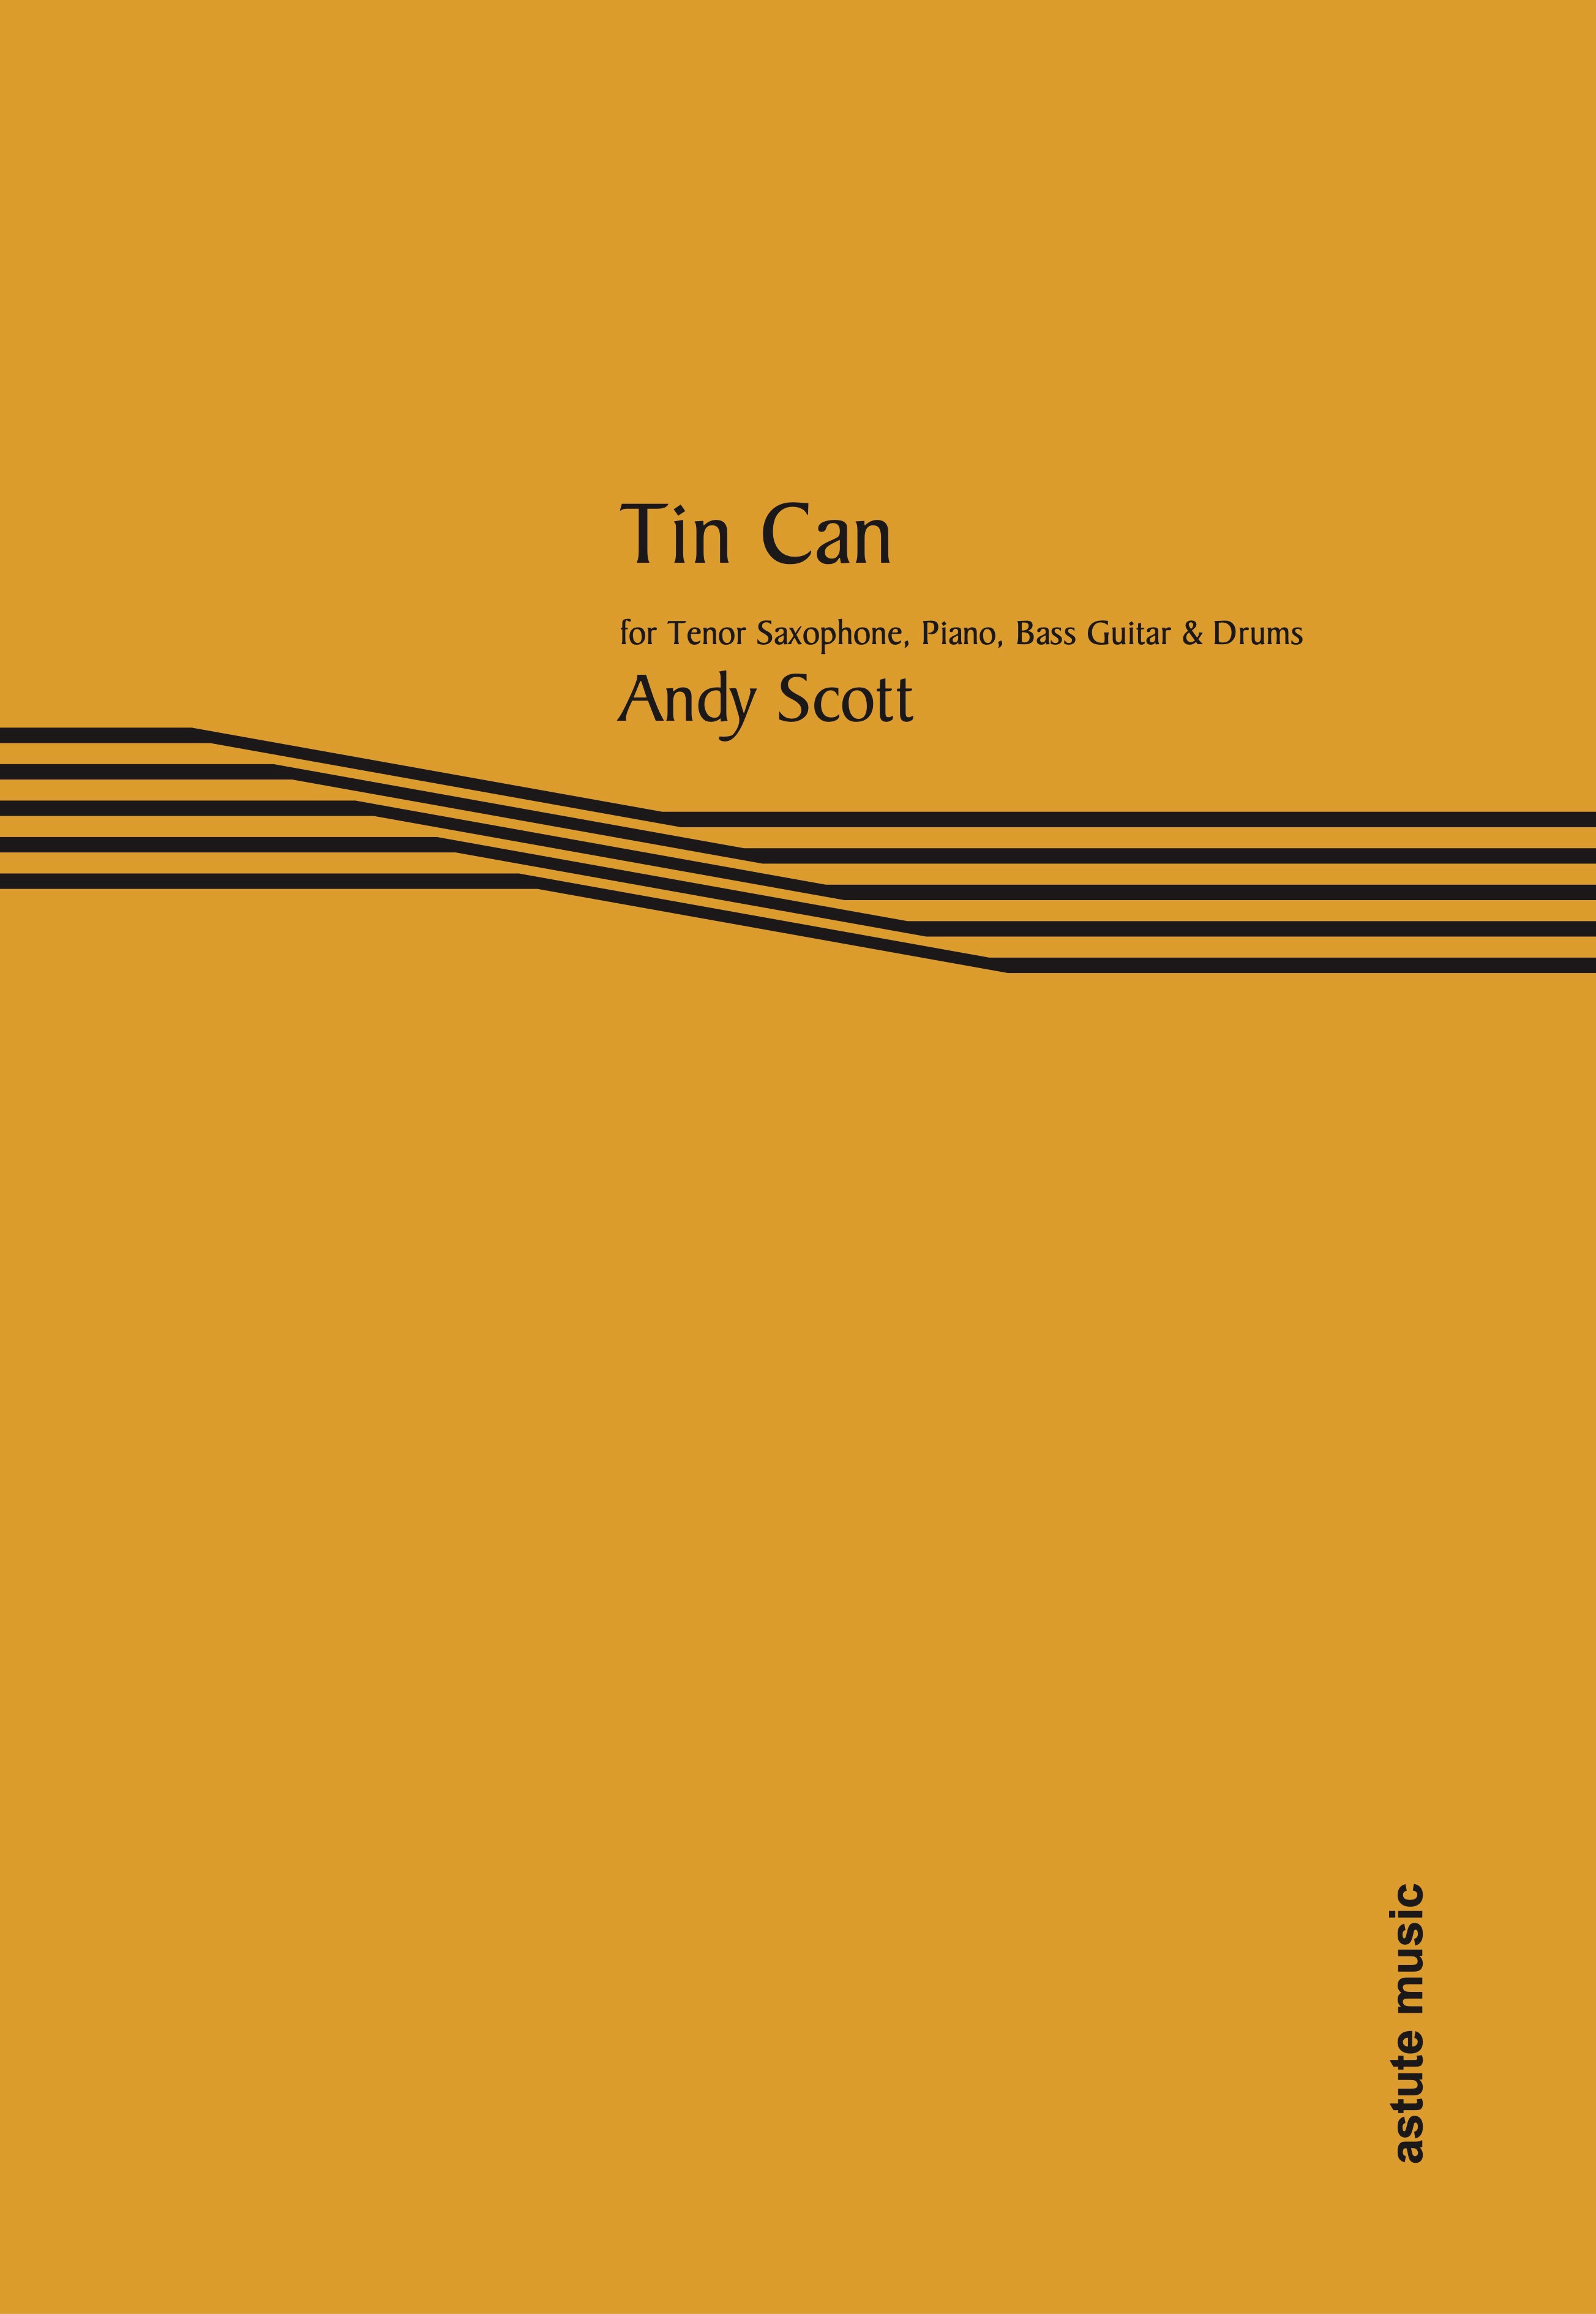 Scott Tin Can Tenor Sax, Piano, Bass Gtr & Drums Sheet Music Songbook